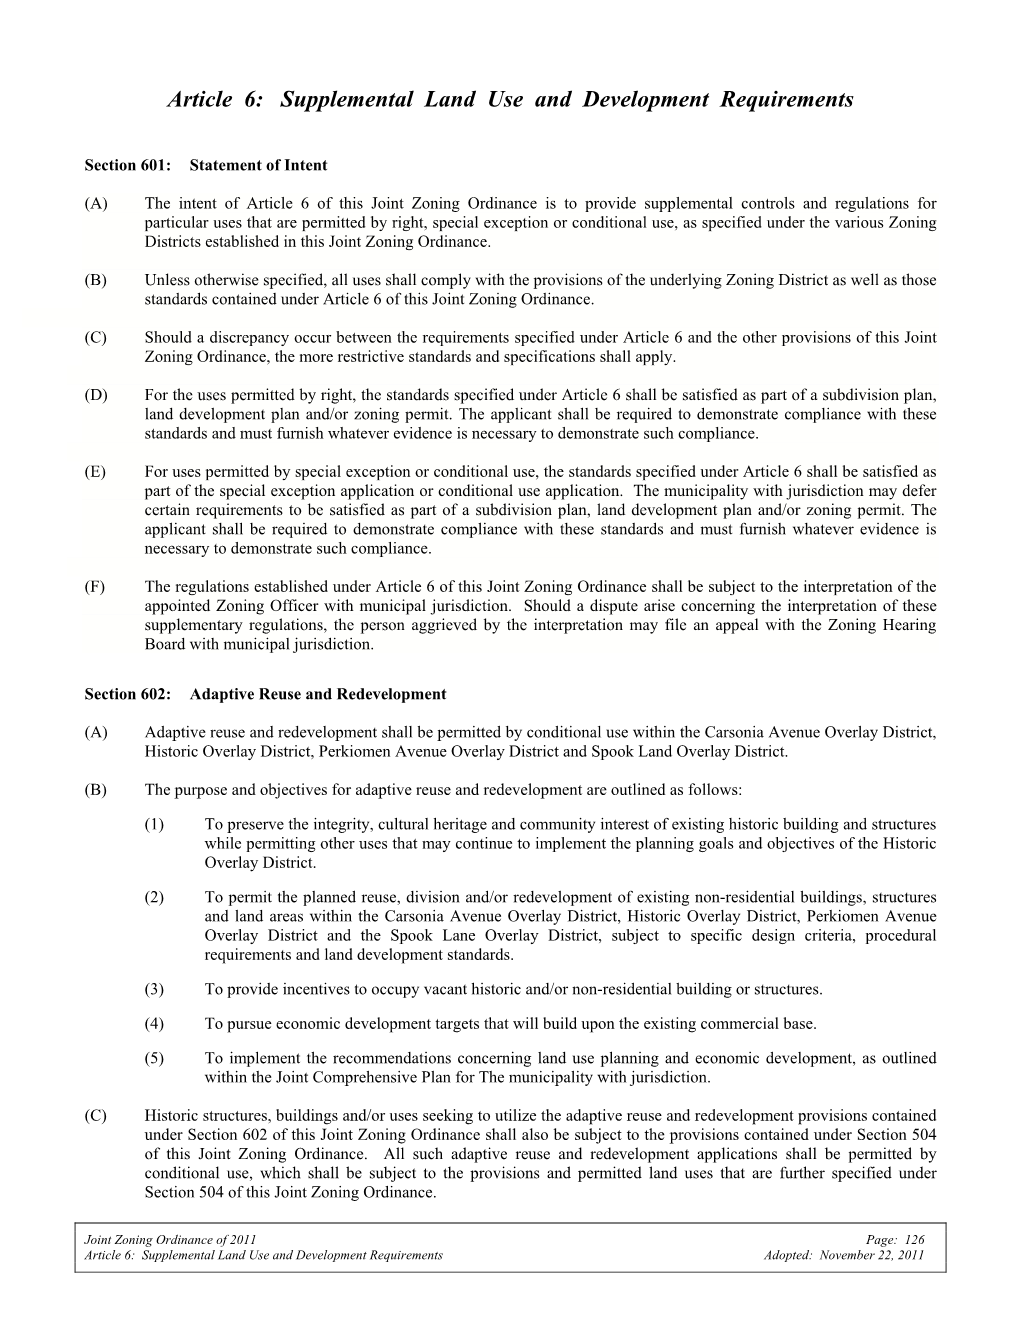 Zoning Article 6 – Supplemental Regulations